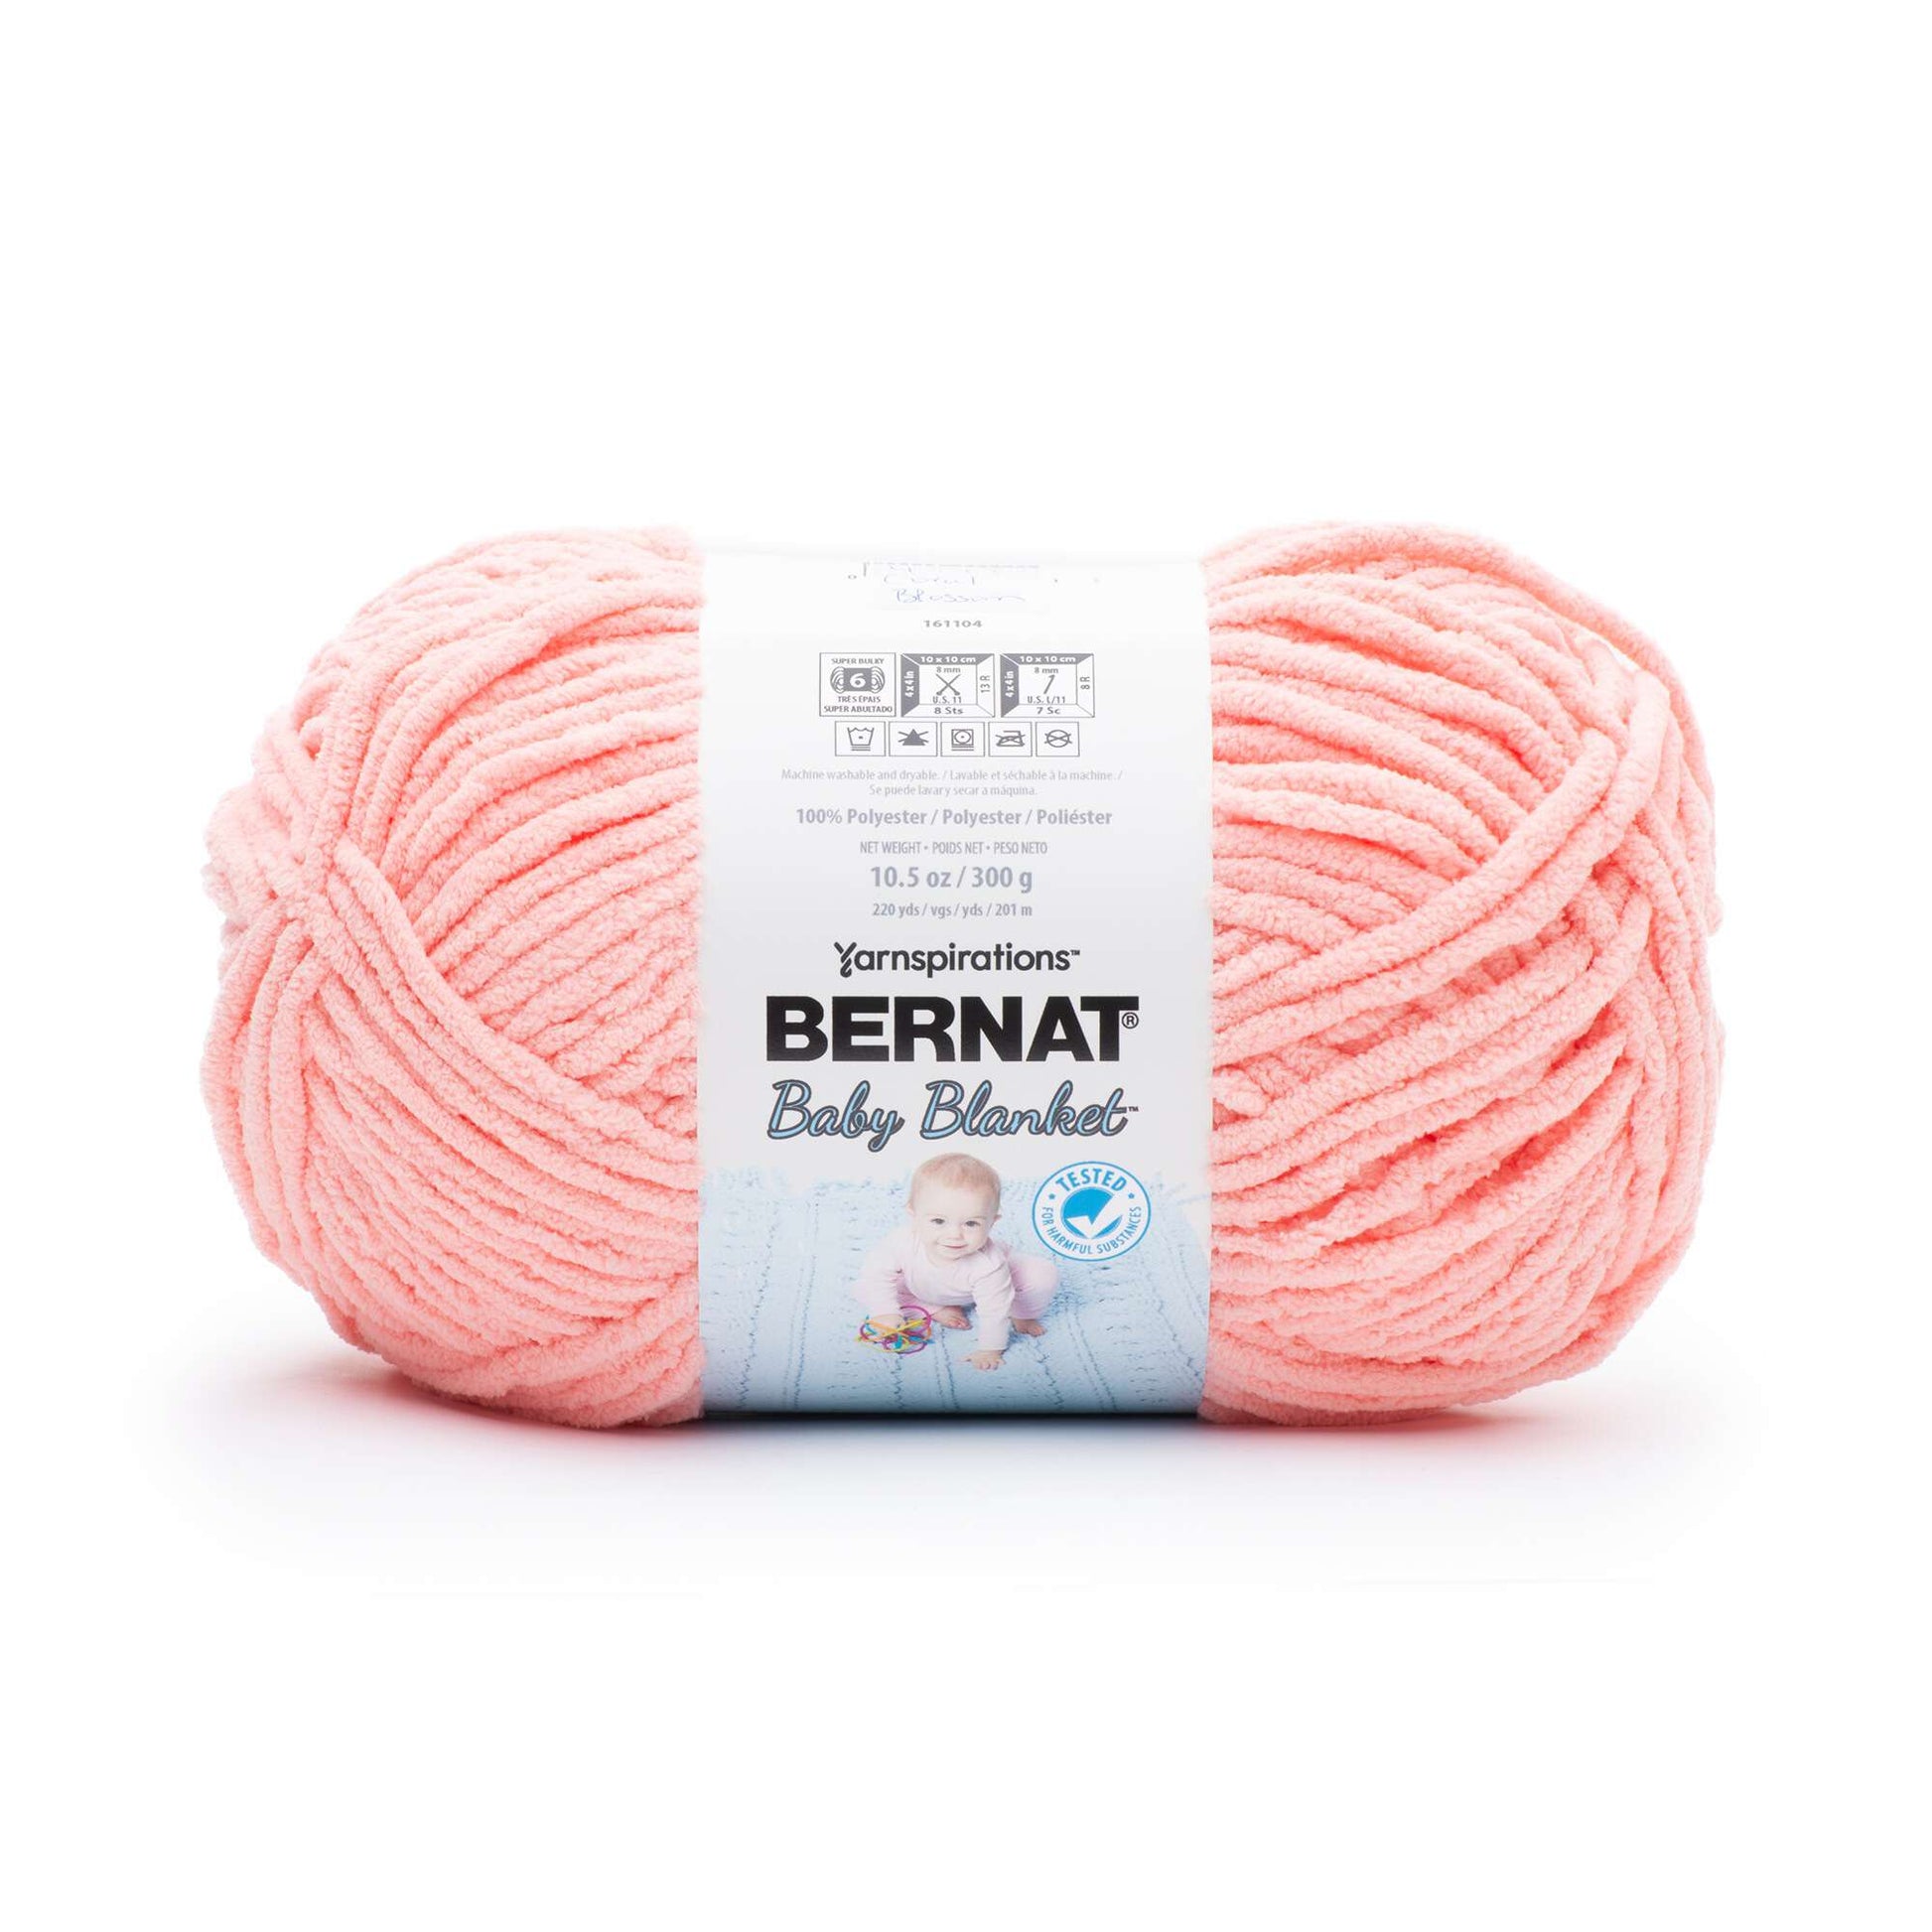 Bernat Baby Blanket Yarn Colour 04310 Baby Lilac 300 Grams/10.5 Ounces 220  Yards 6 Super Bulky knitting, Crochet -  Canada